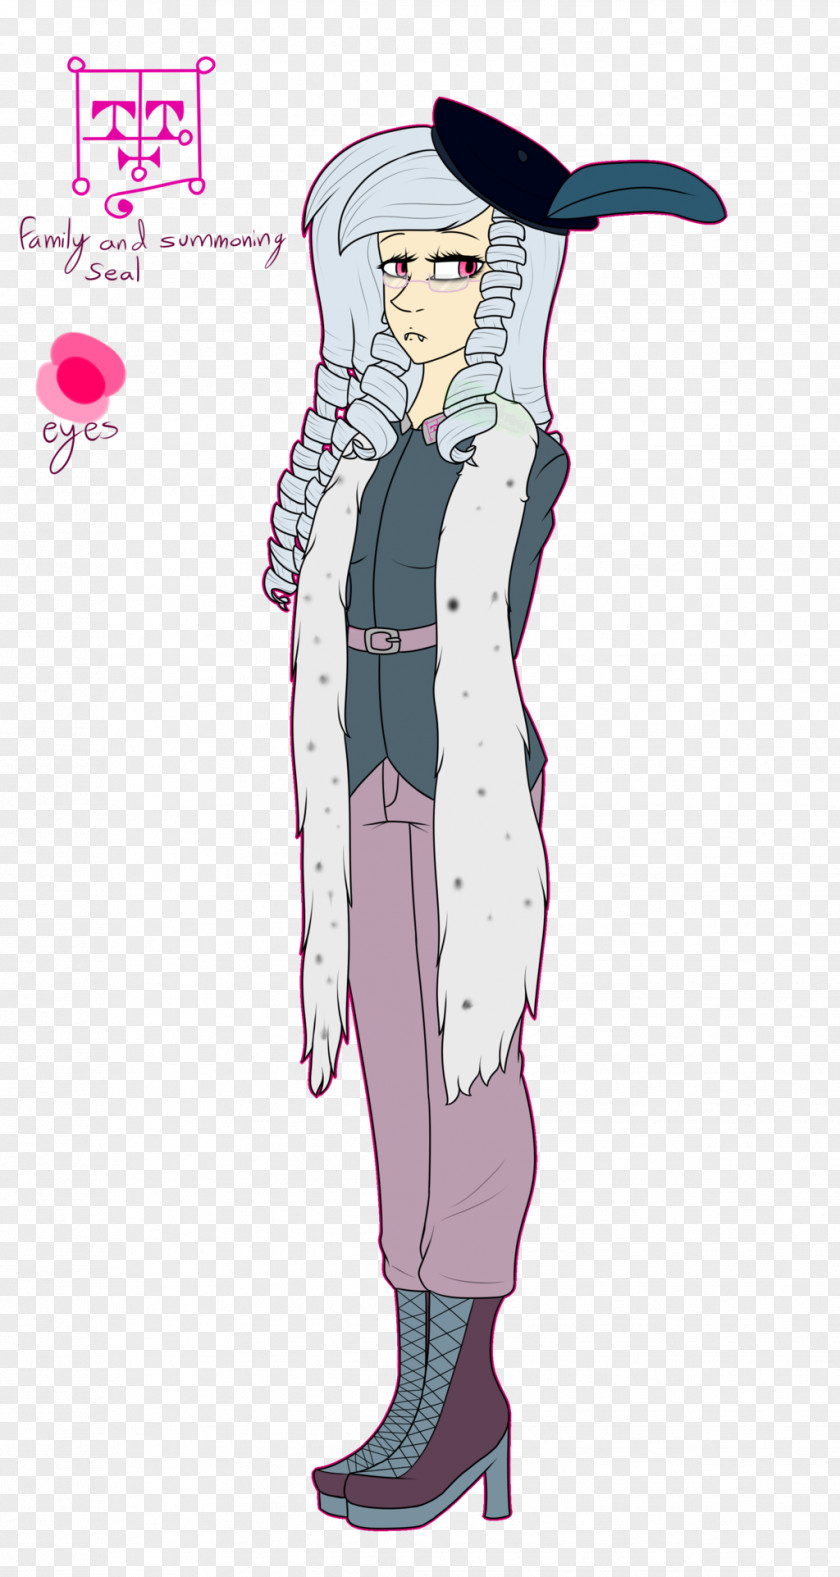 Botis Pink M Costume Cartoon Character PNG